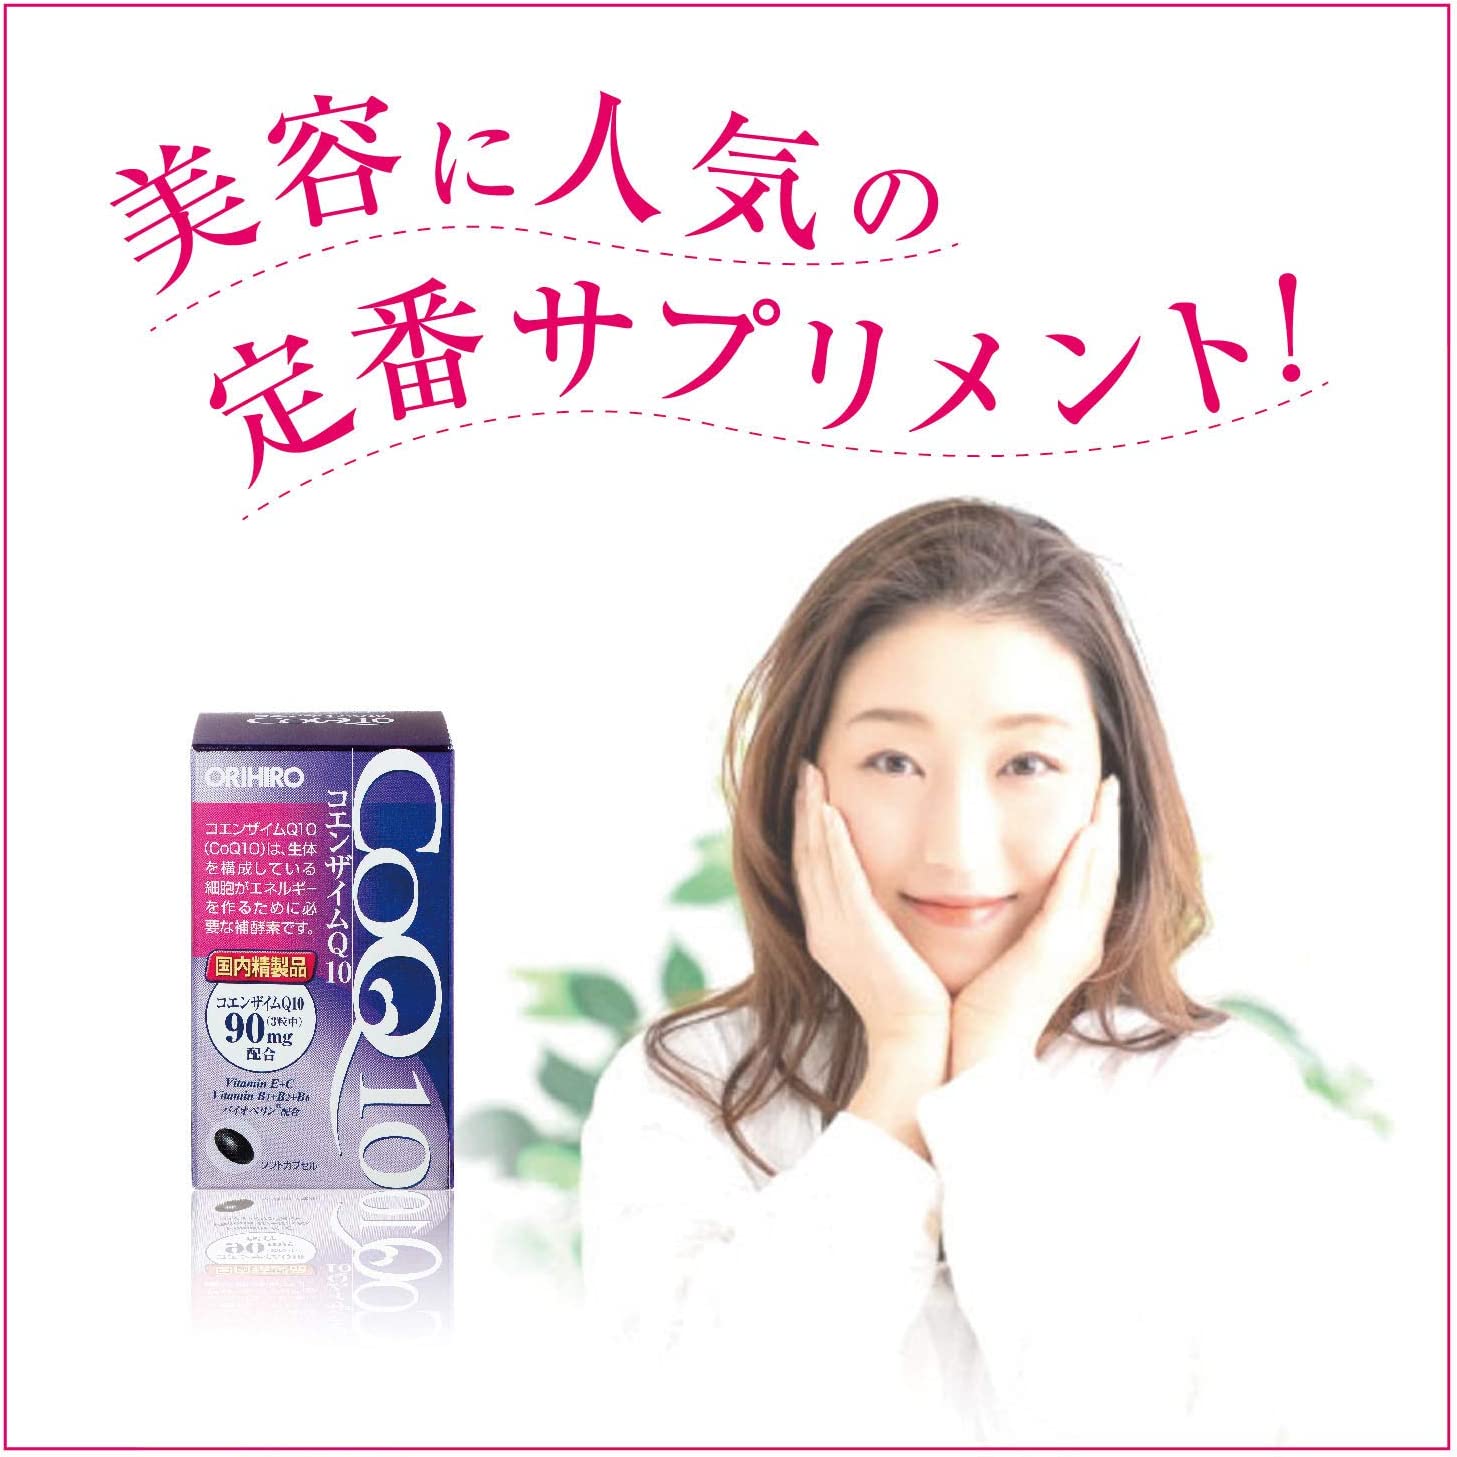 ORIHIRO Coenzyme Q10 / Vitamin Supplement 90 Capsules for 30 Days Japan